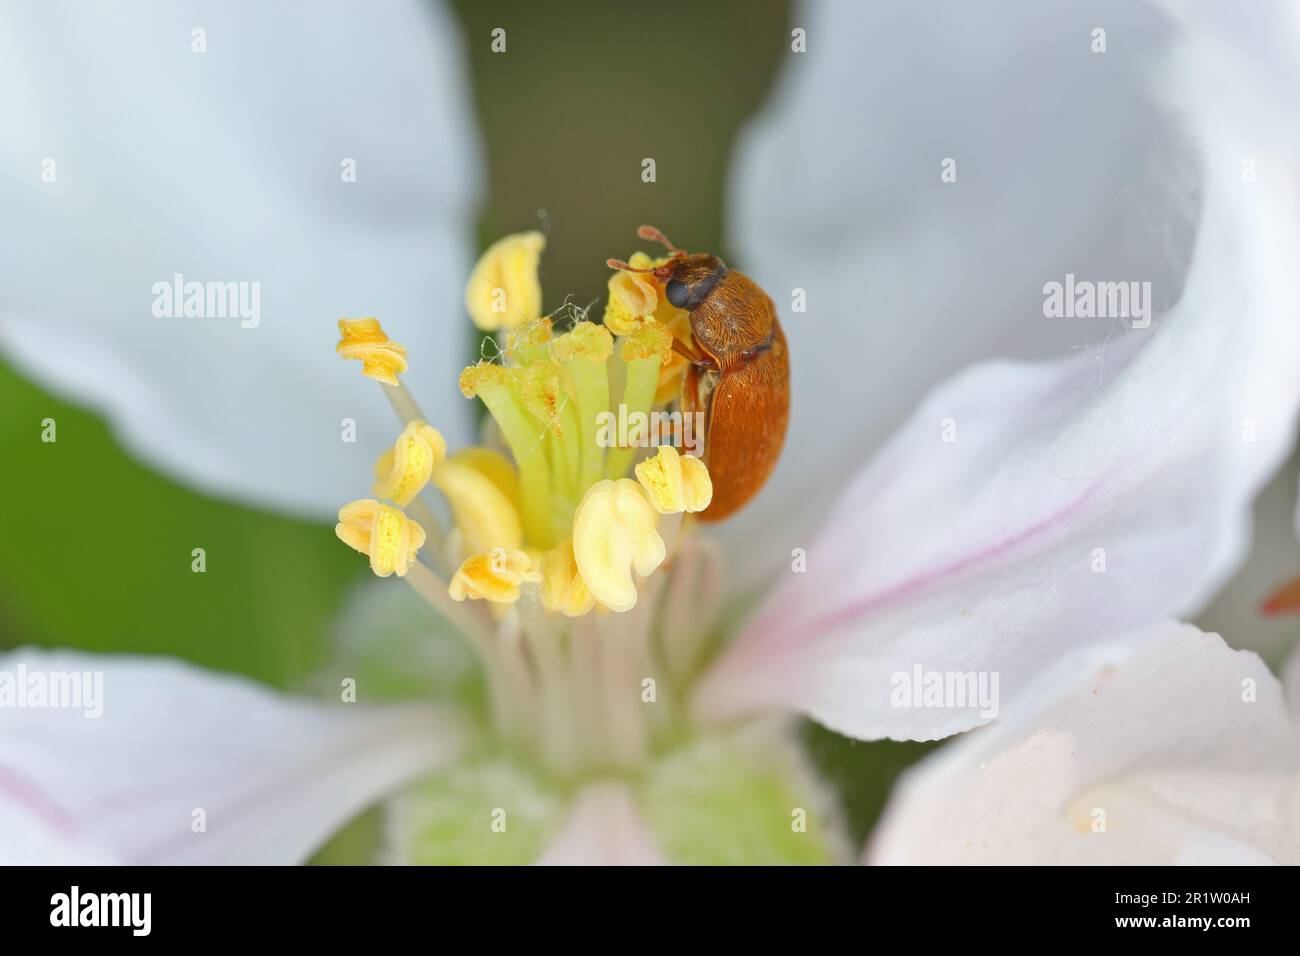 Raspberry Beetle (Byturus ochraceus), on a flower of apple tree. Stock Photo